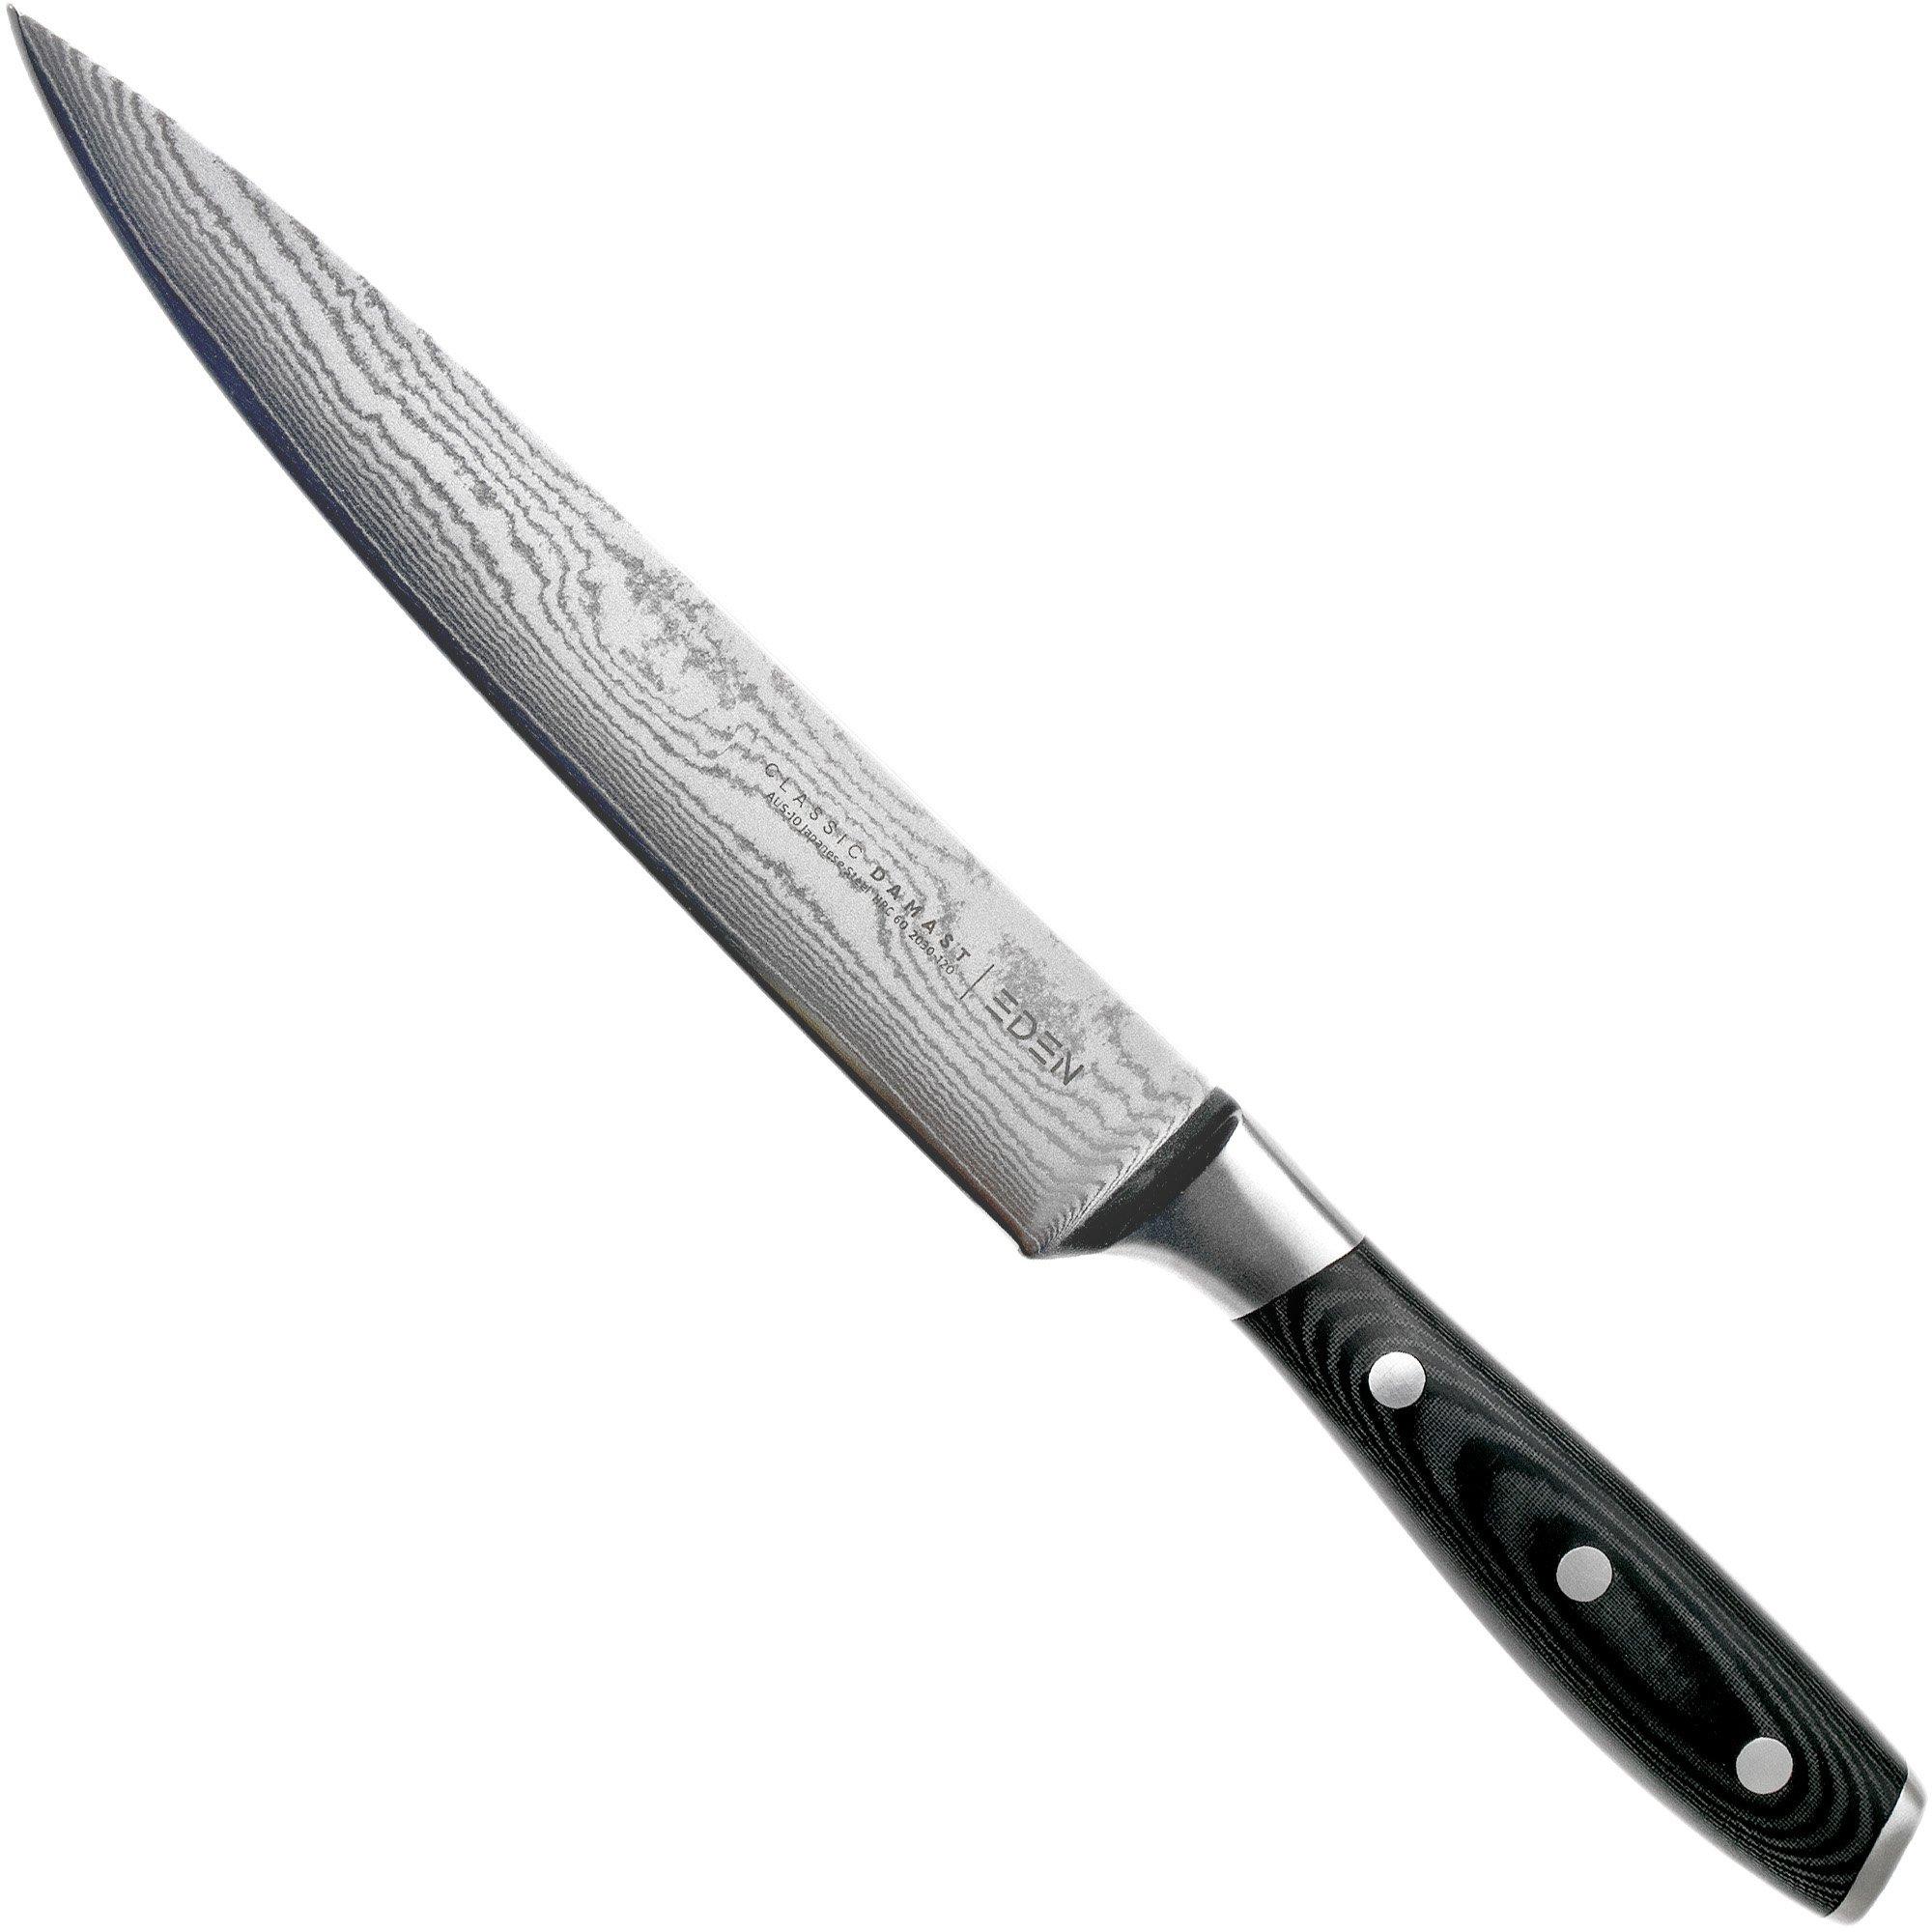 6 Deejo steak knives, Coral wood - STEAK KNIVES - TABLEWARE